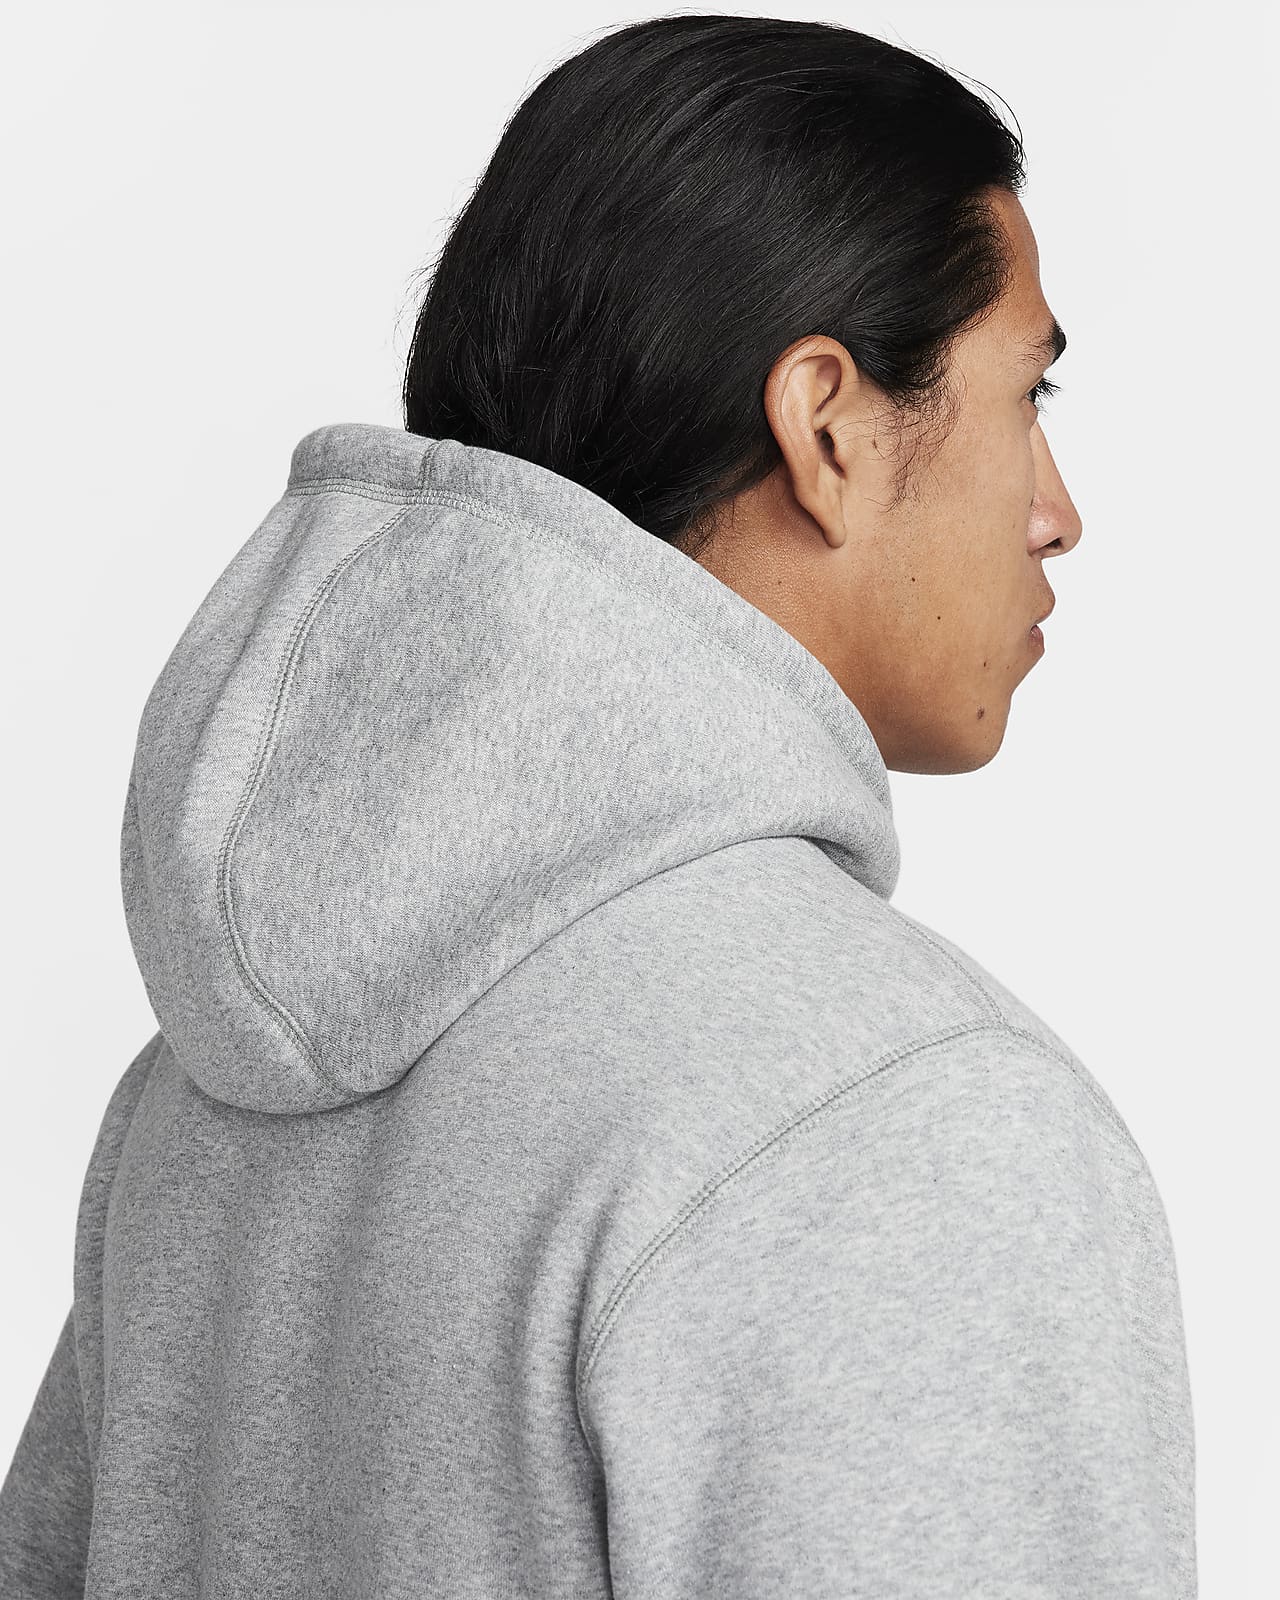 Nike Club Fleece Men\'s Pullover Hoodie. | Sweatshirts